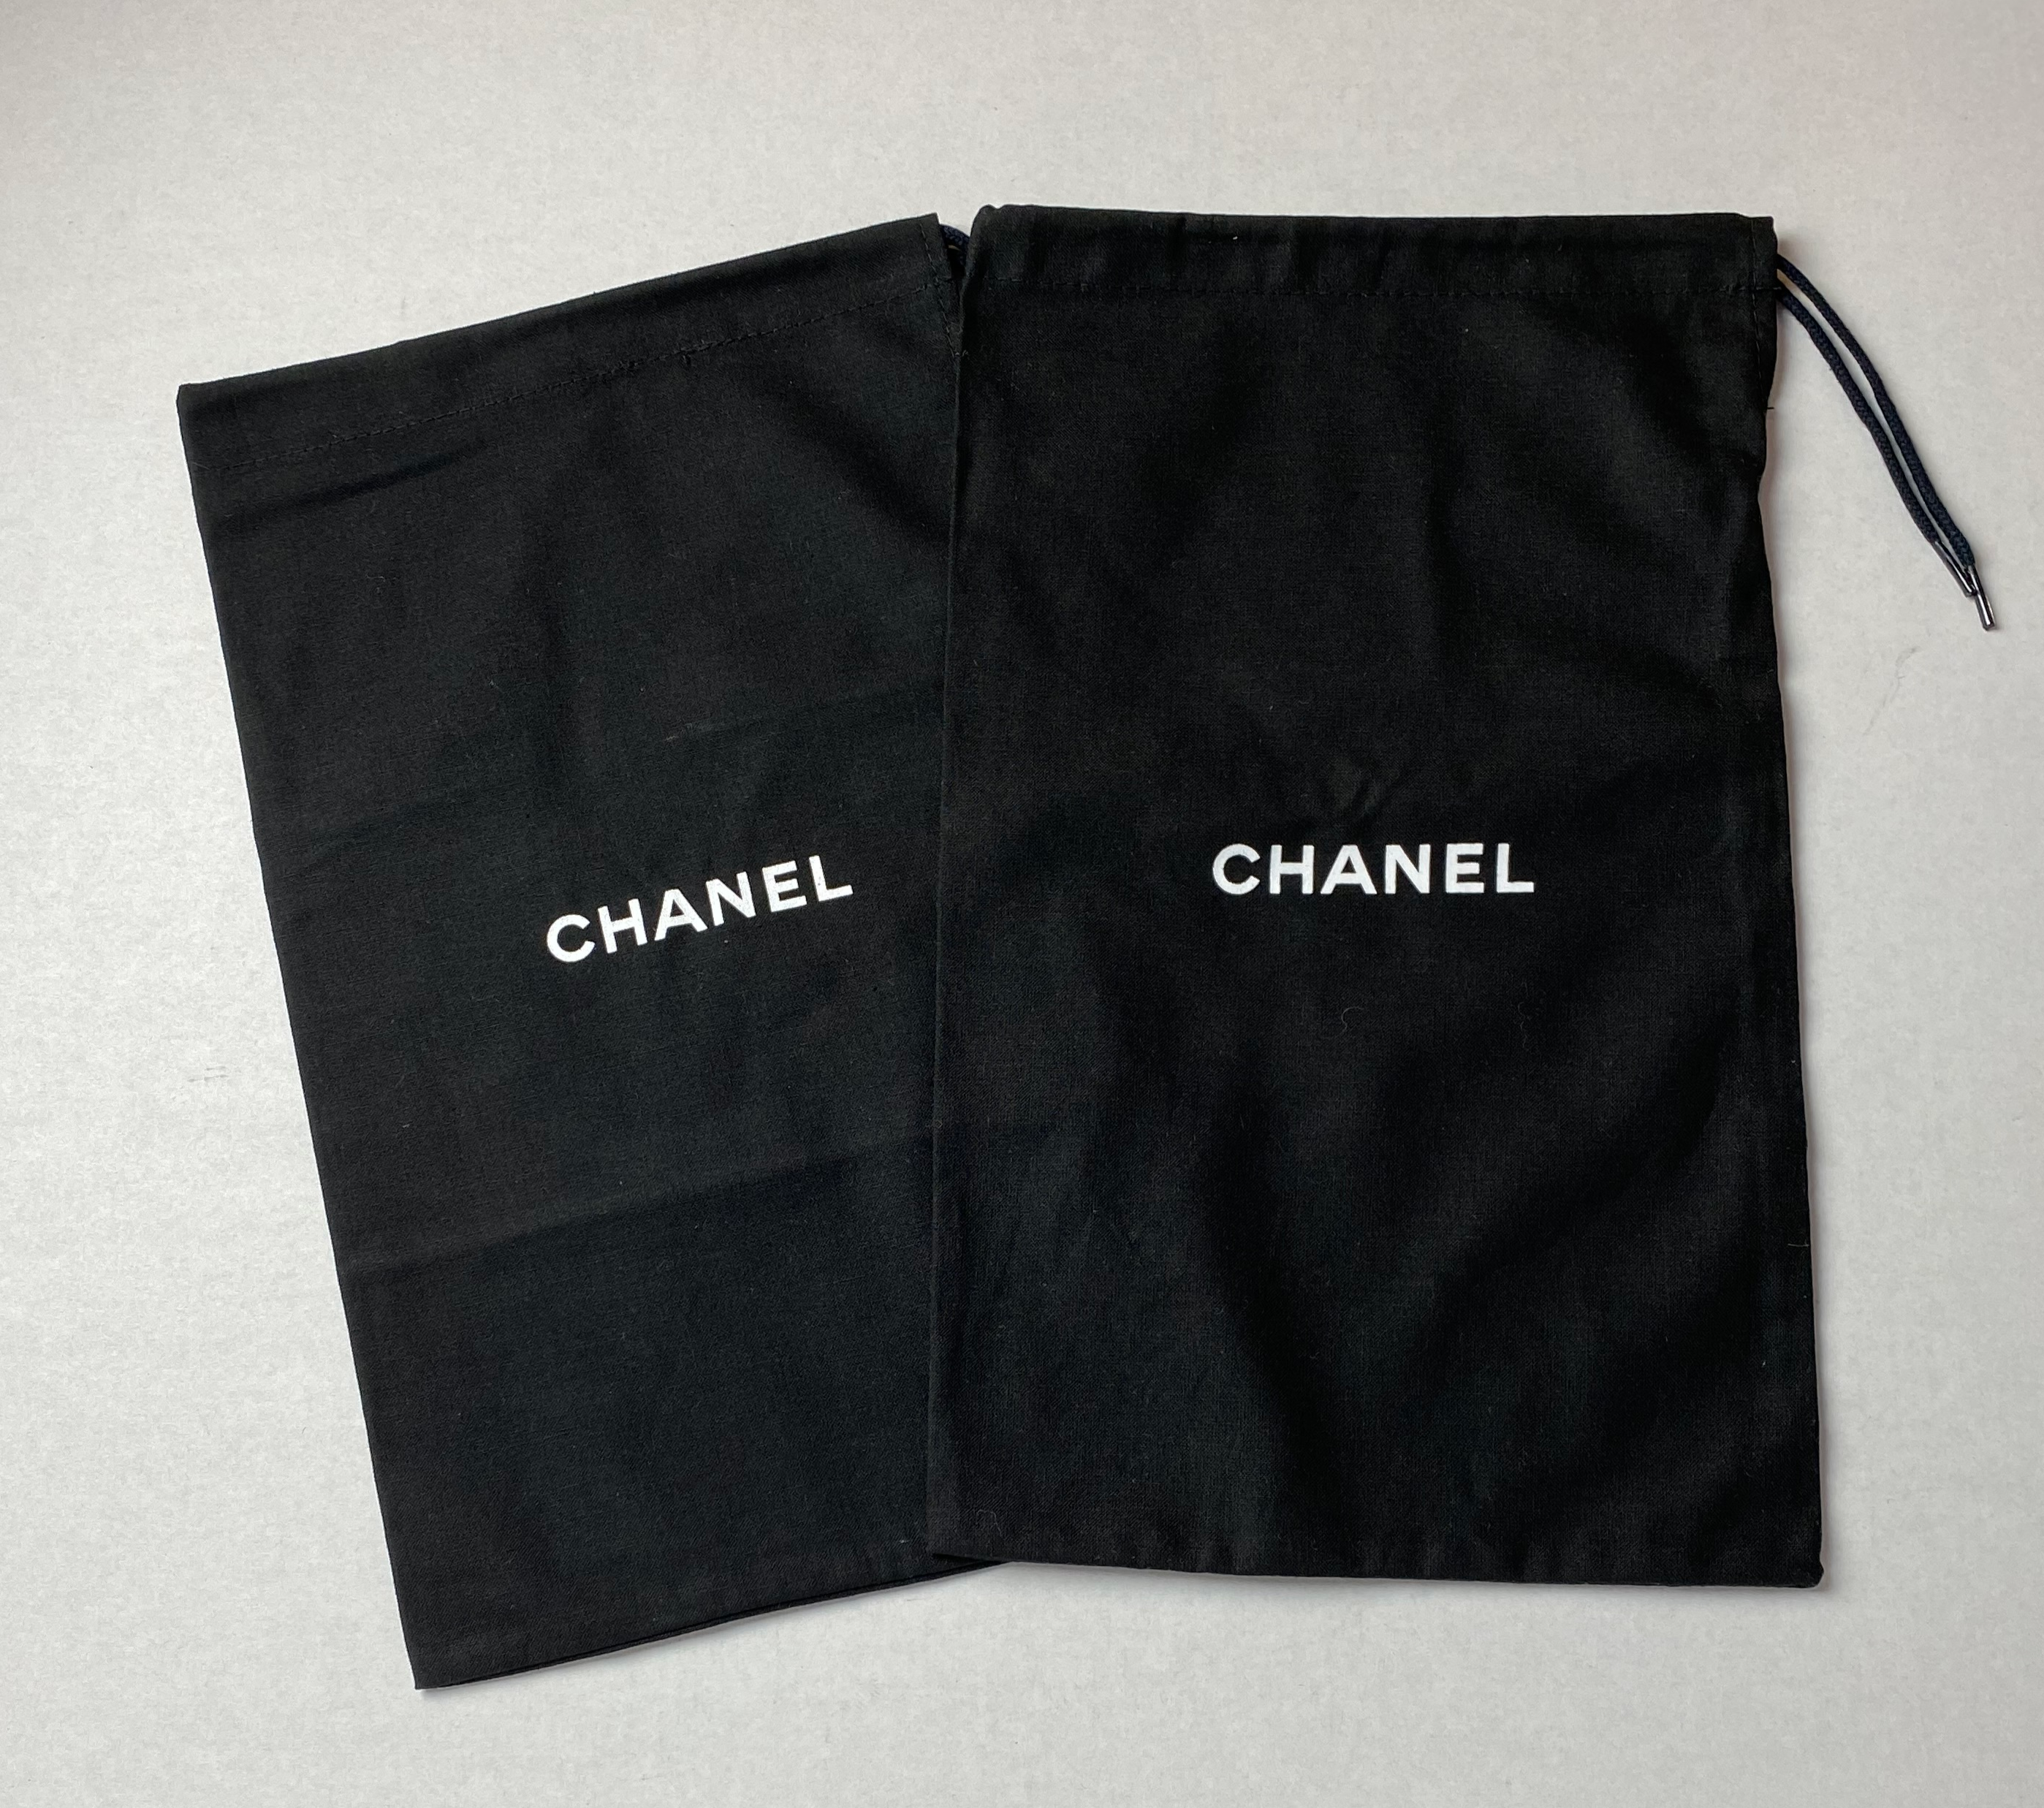 chanel shopping bag paper